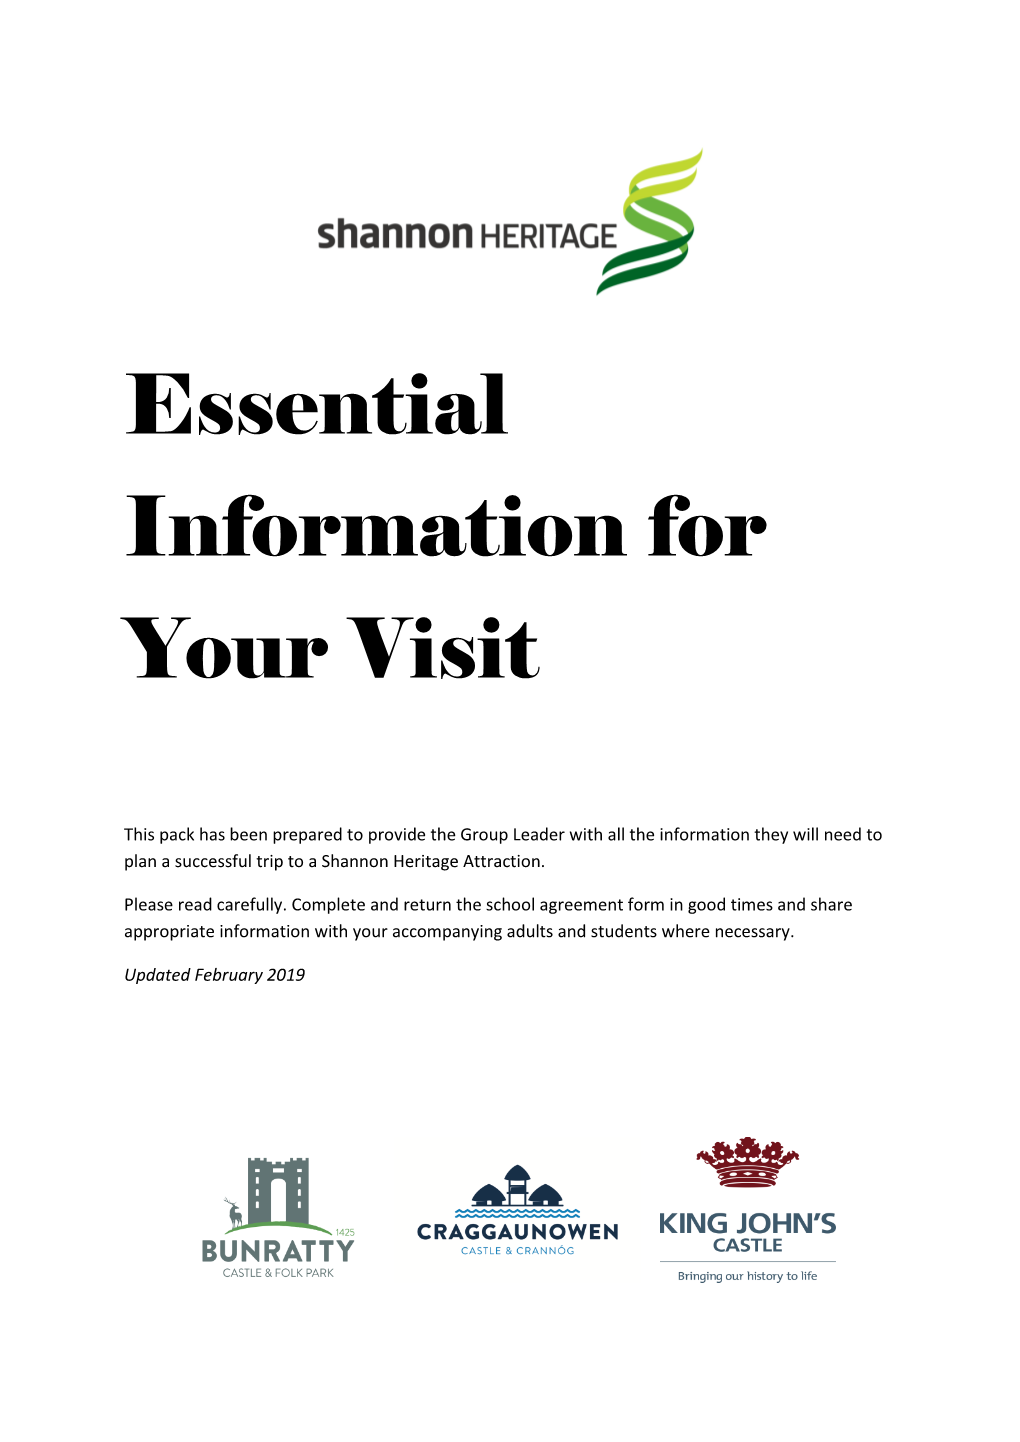 Essential Information for Your Visit’ Information Pack